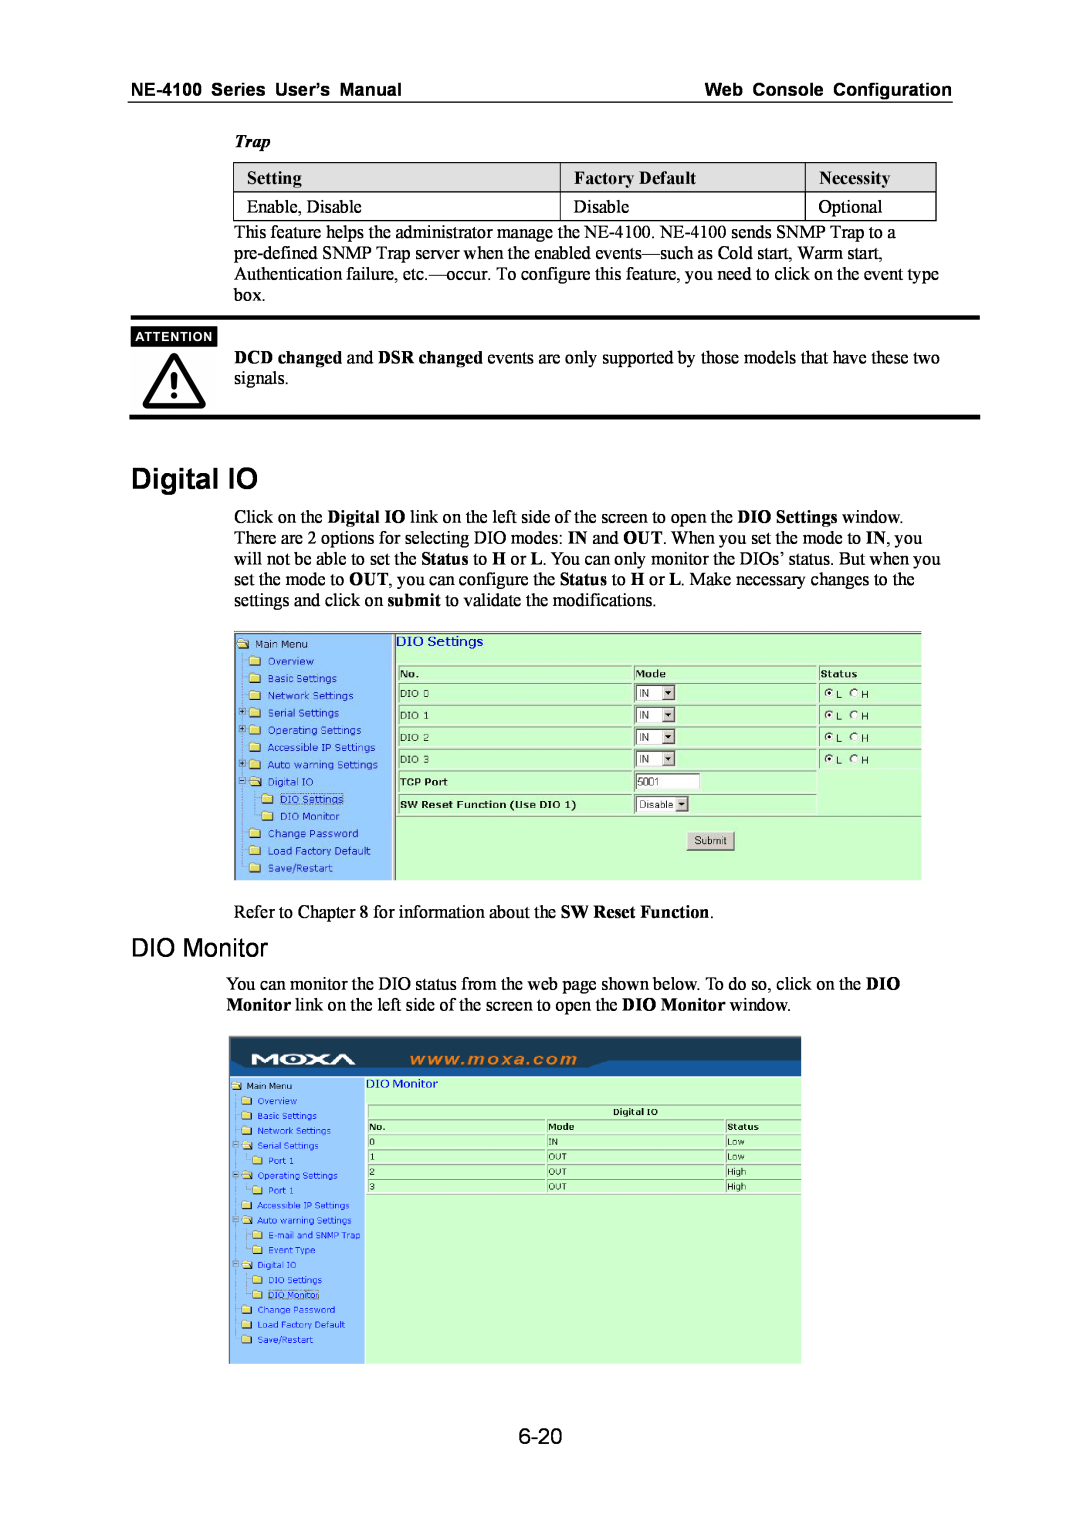 Moxa Technologies Digital IO, DIO Monitor, 6-20, NE-4100 Series User’s Manual, Web Console Configuration, Trap, Setting 